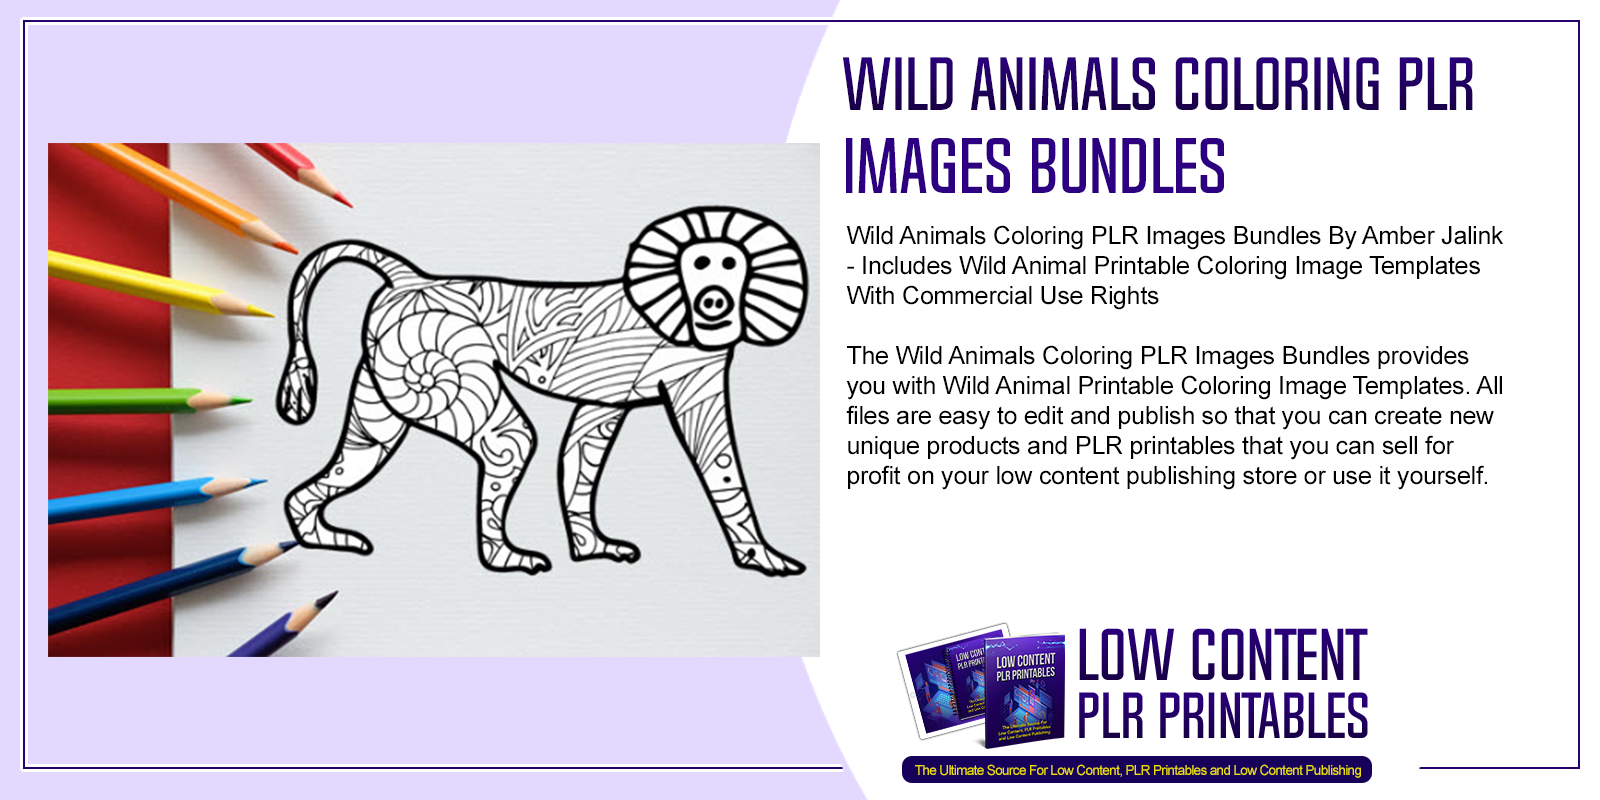 Wild Animals Coloring PLR Images Bundles